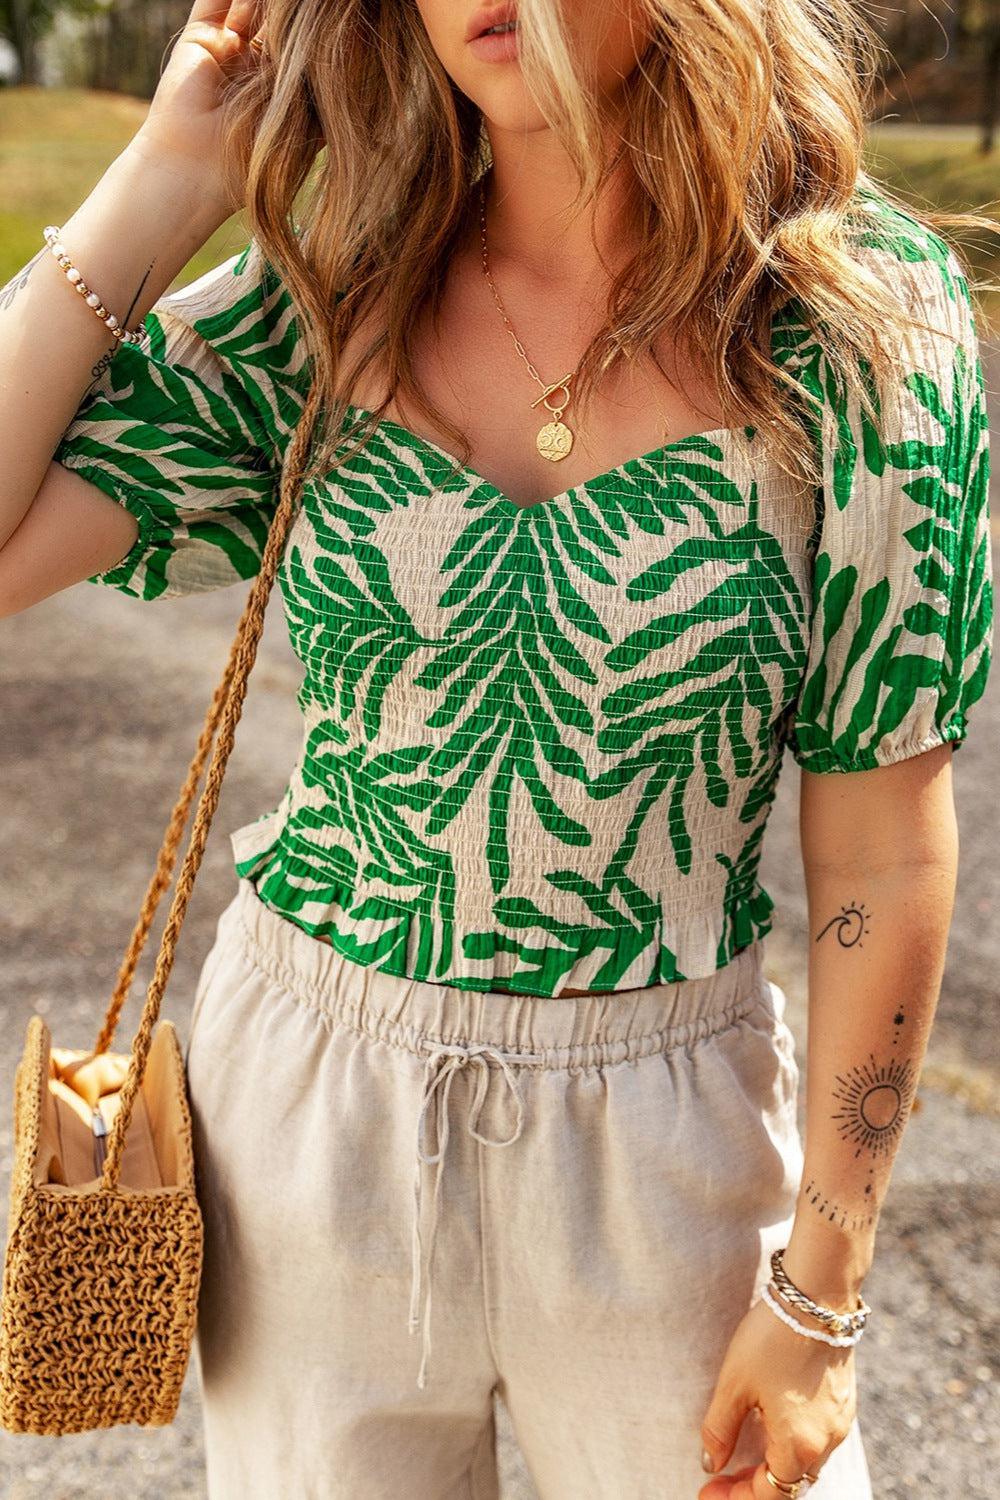 a woman wearing a green leaf print top